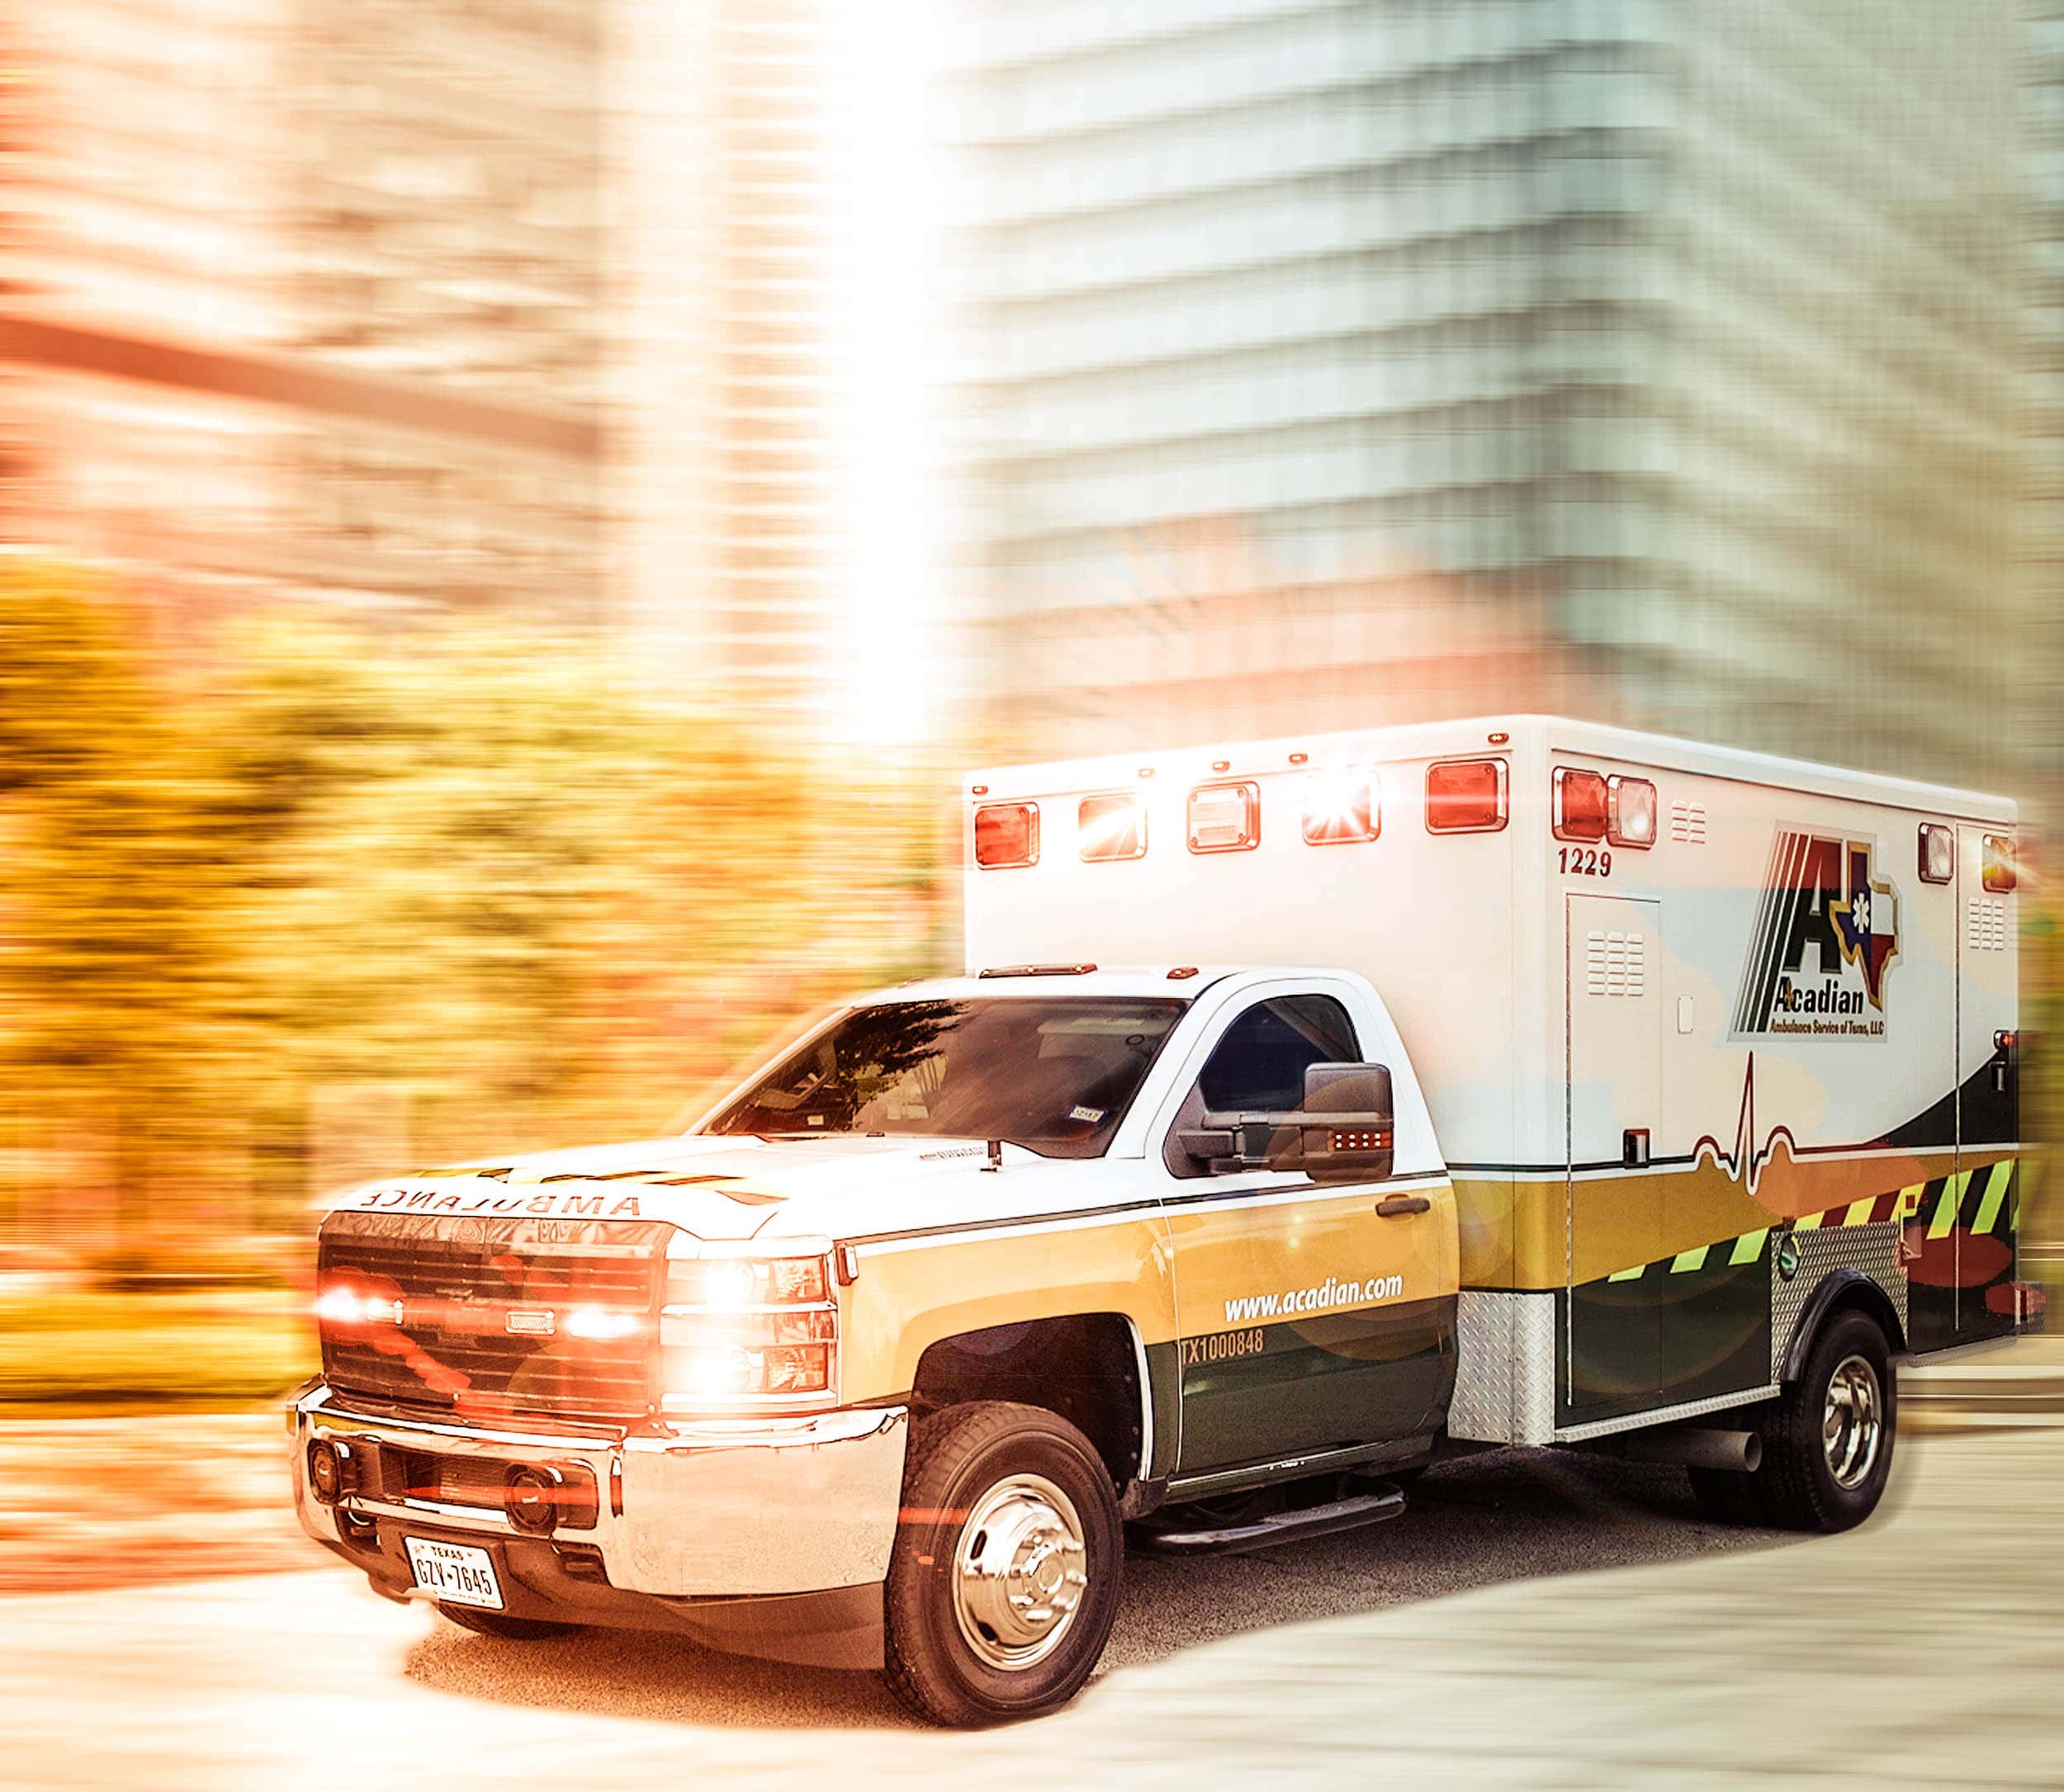 Acadian Ambulance’s Texas Operations Earn Reaccreditation from CAAS